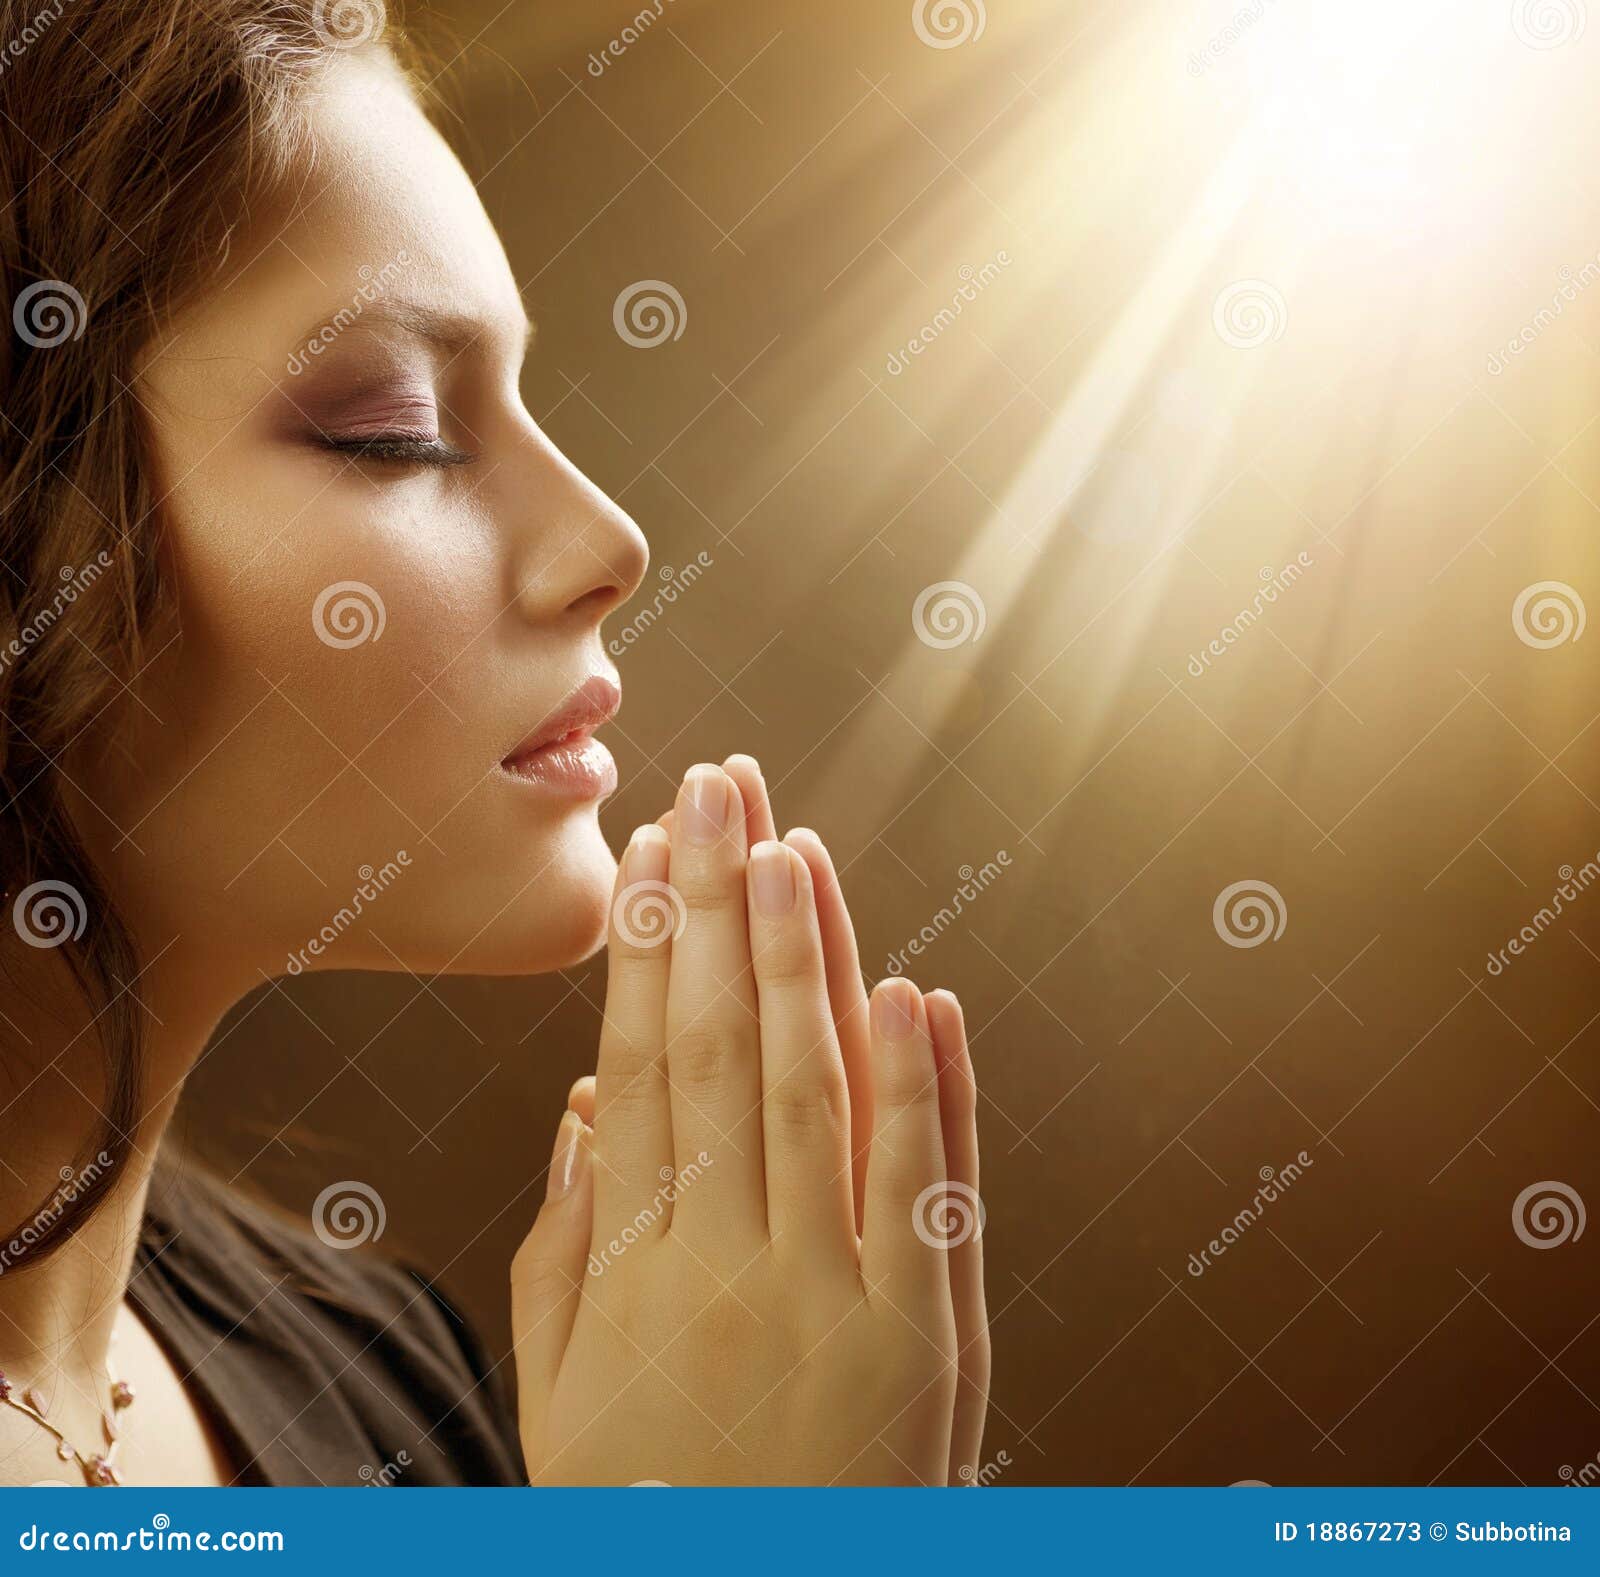 young woman praying close-up